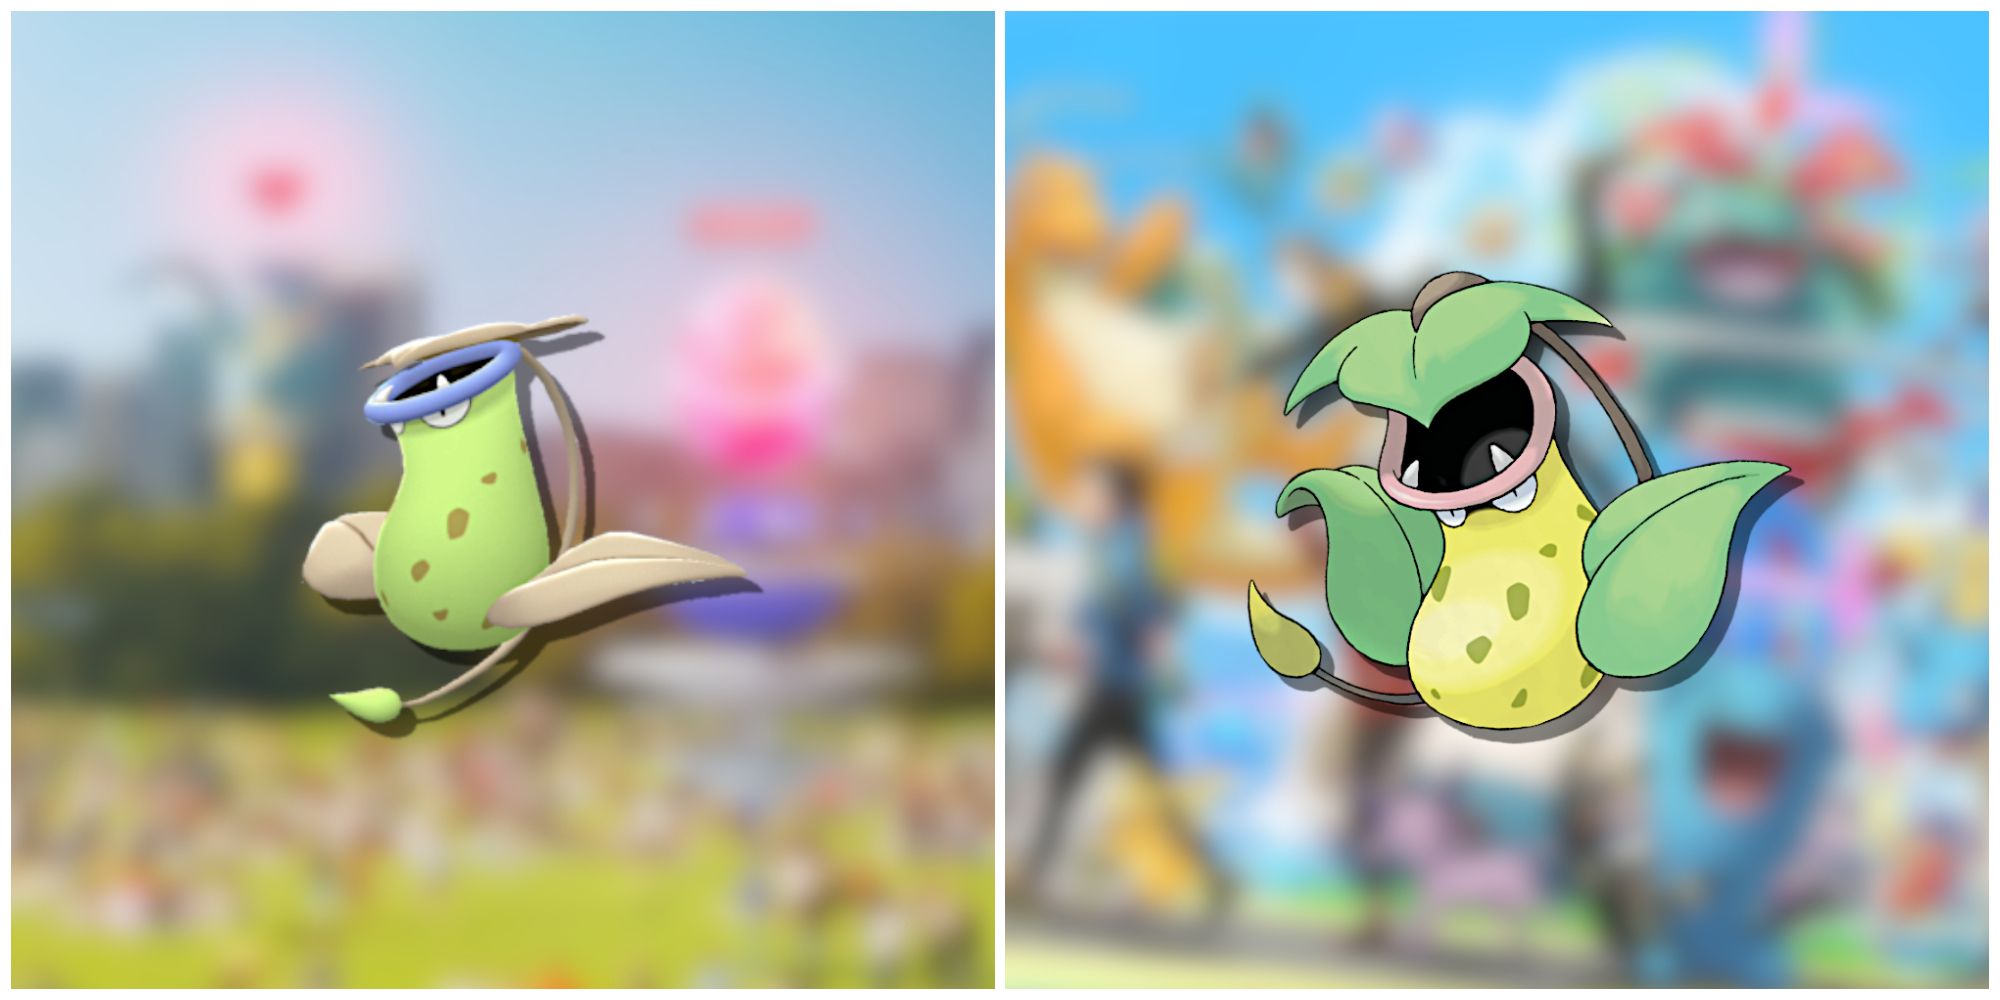 Split image of Shiny Victreebel and Victreebel from Pokemon GO